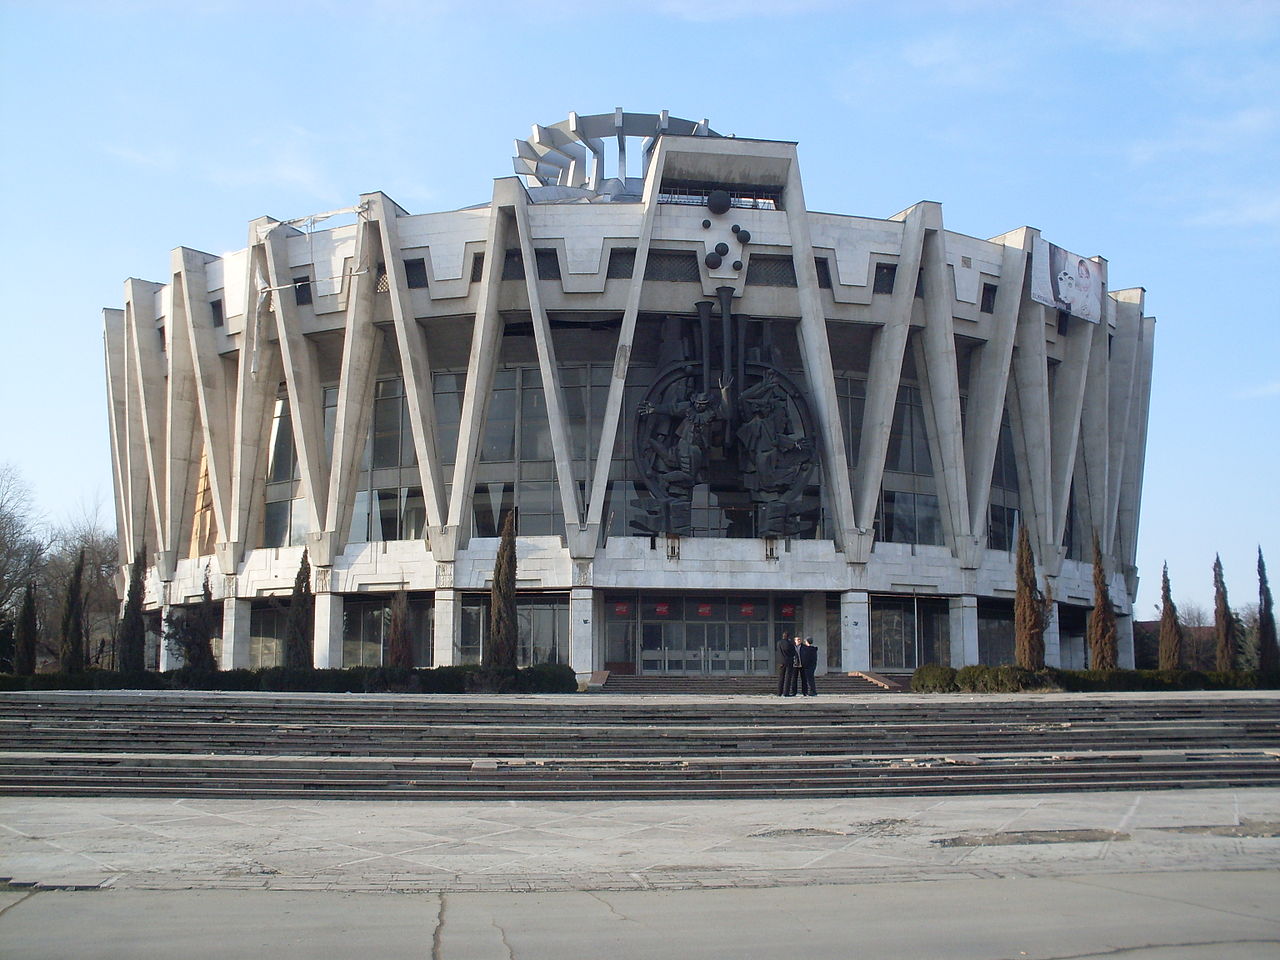 The State Circus of Moldova Image: Gikü under a CC license via Wikimedia Commons